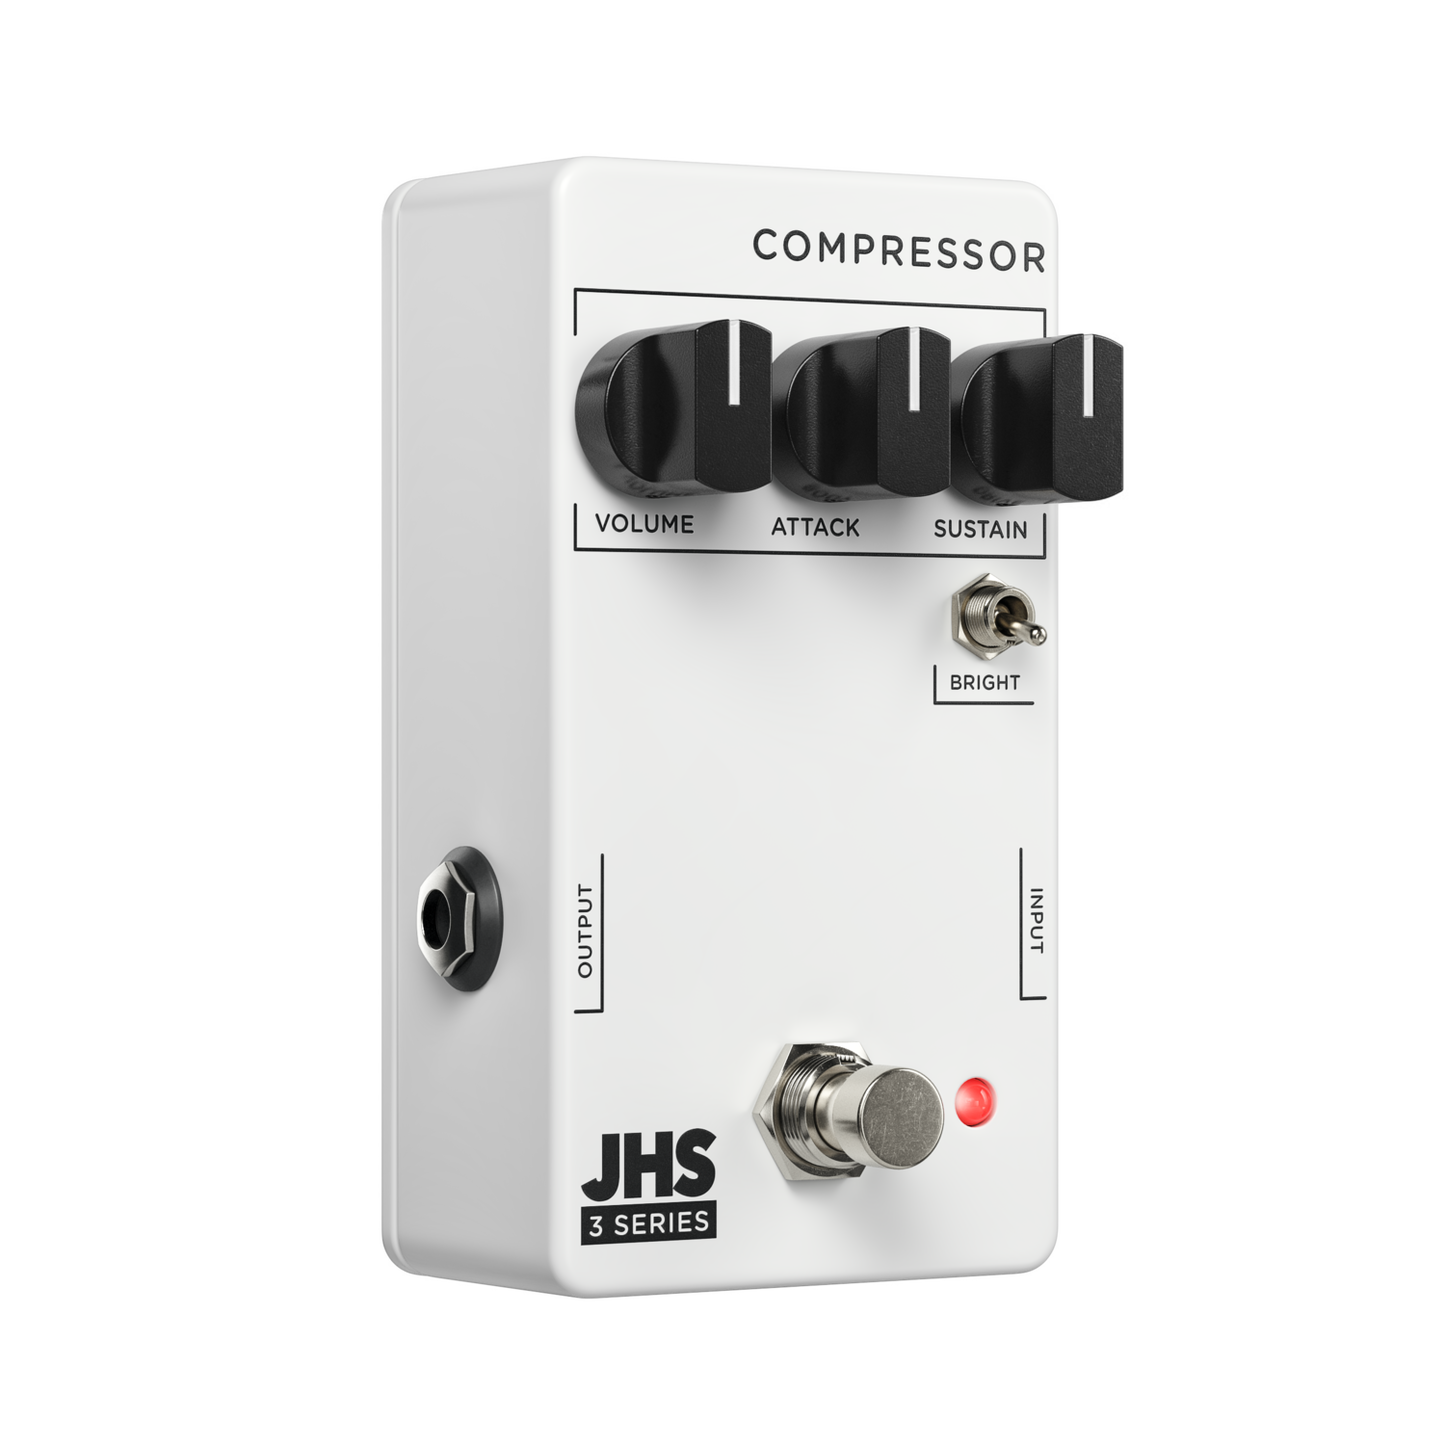 JHS 3 Series Compressor Pedal